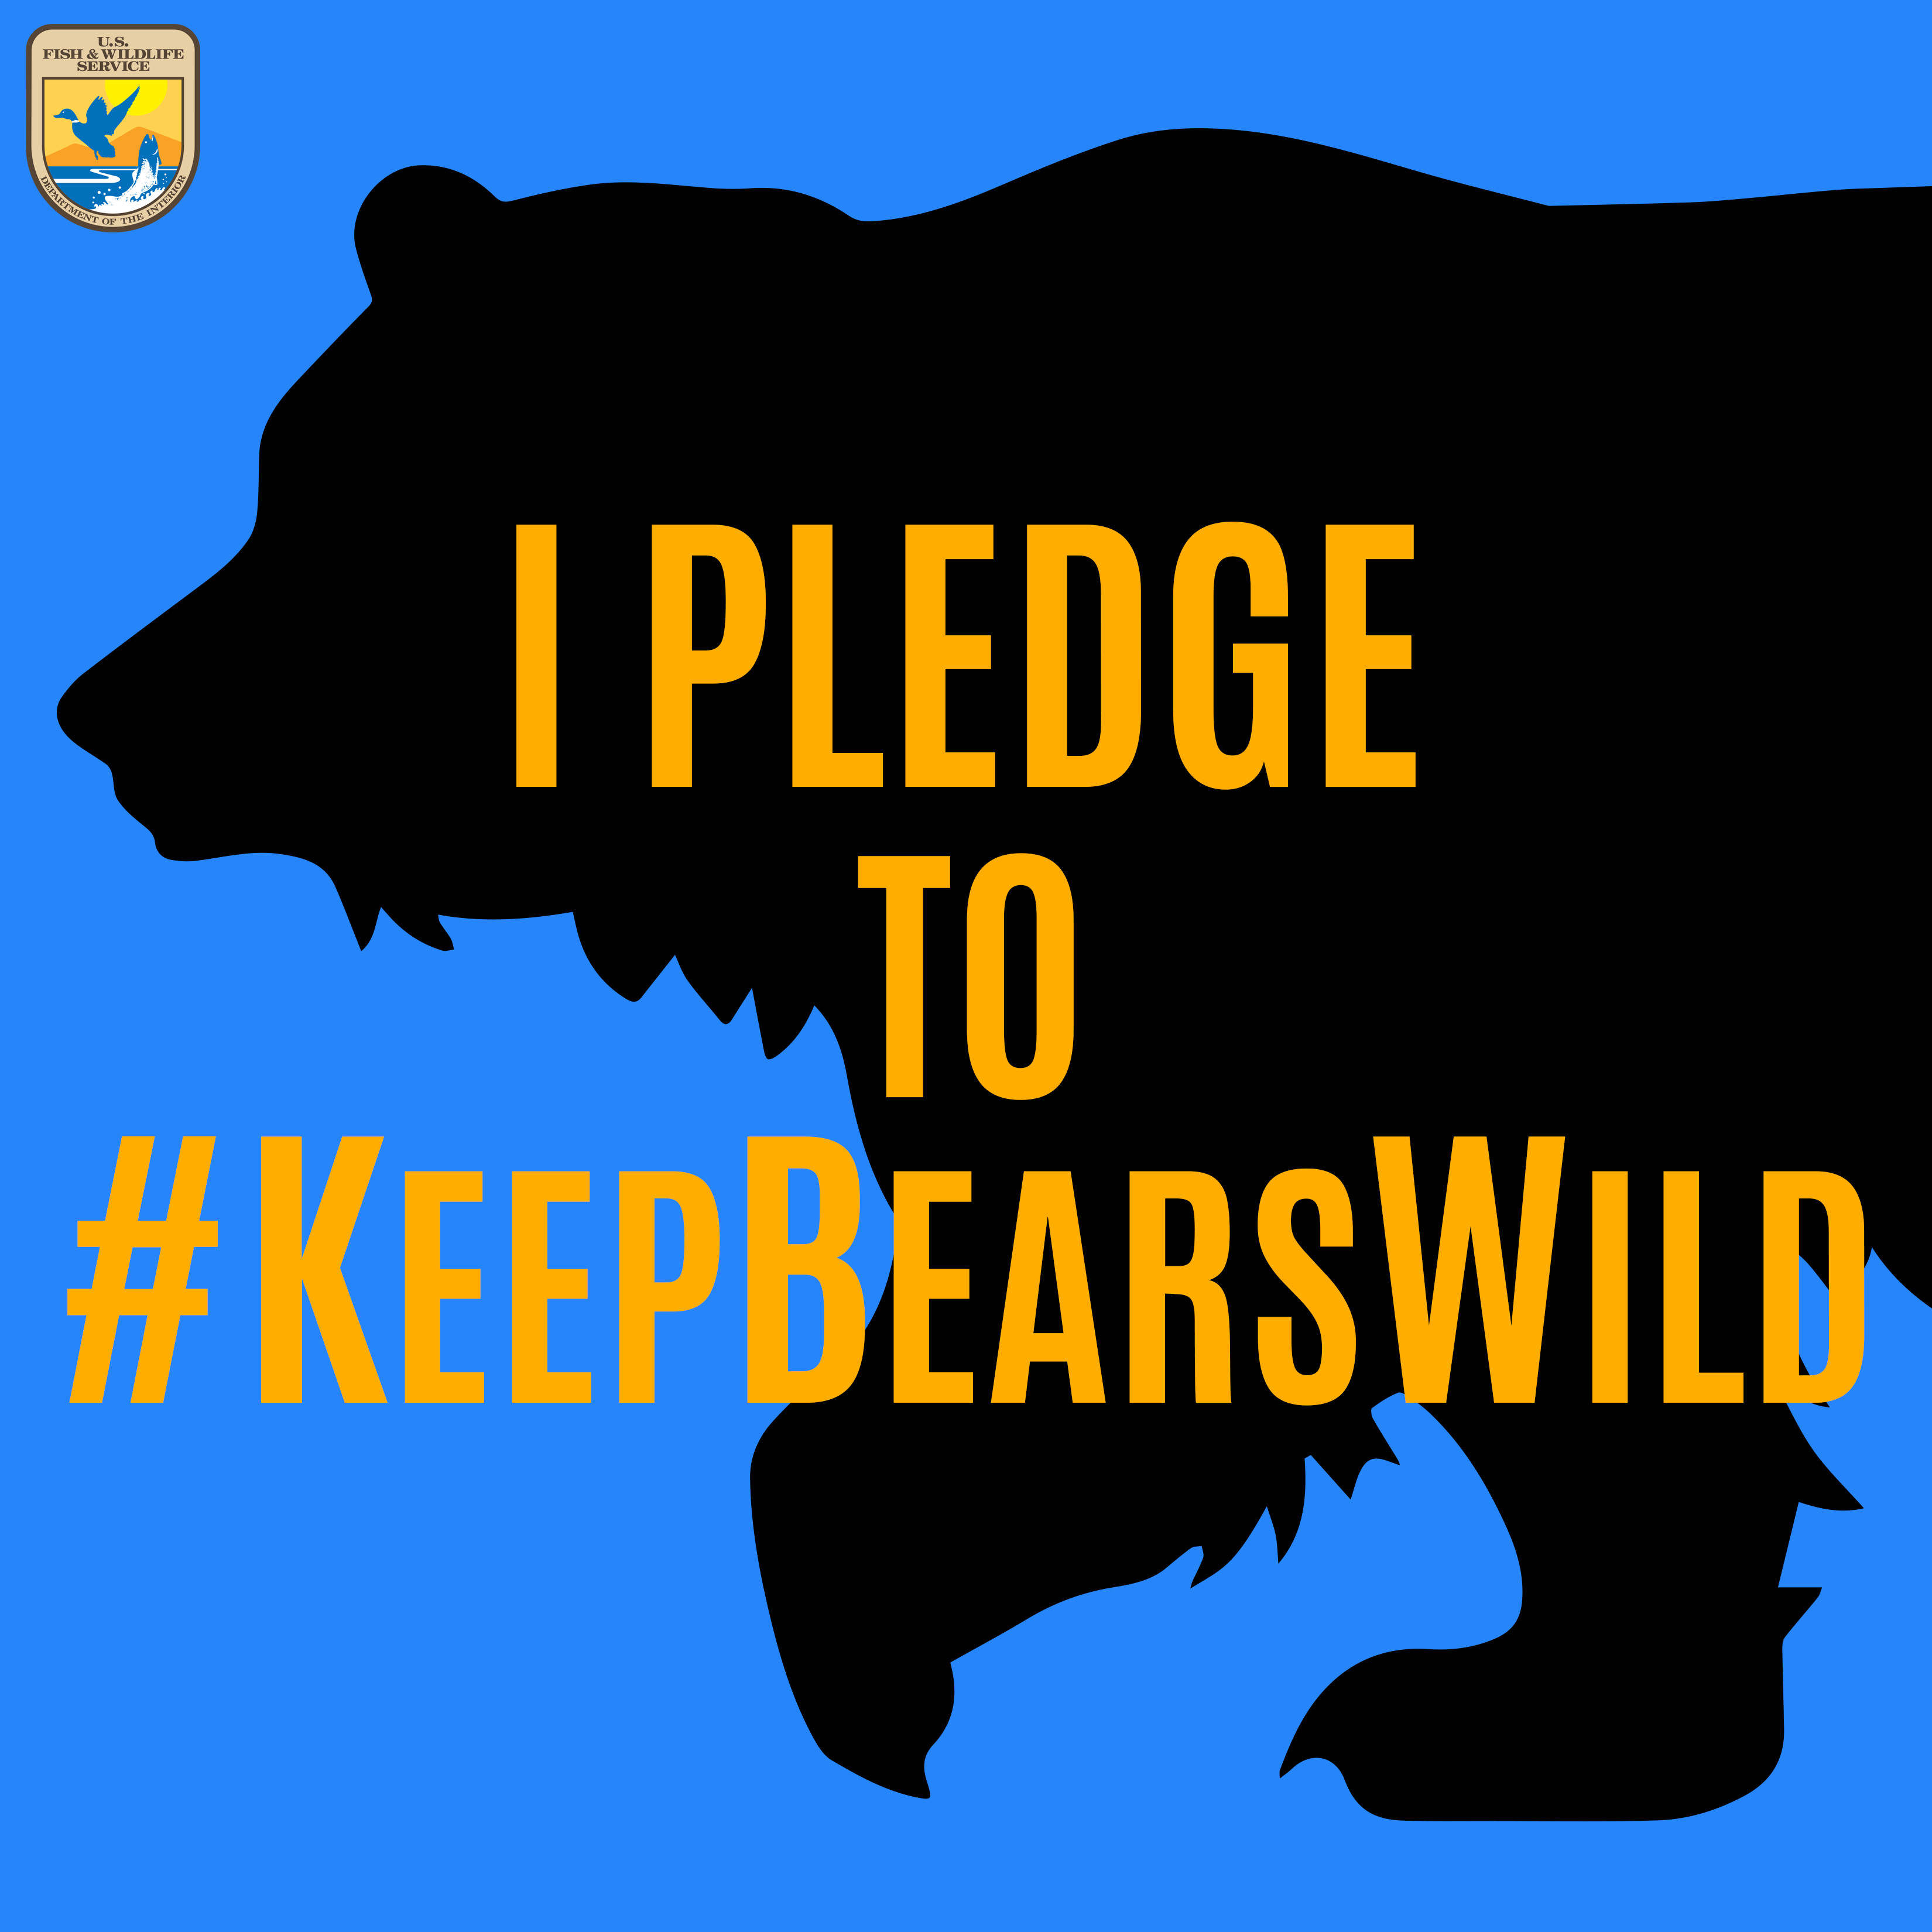 Bear Aware Pledge 